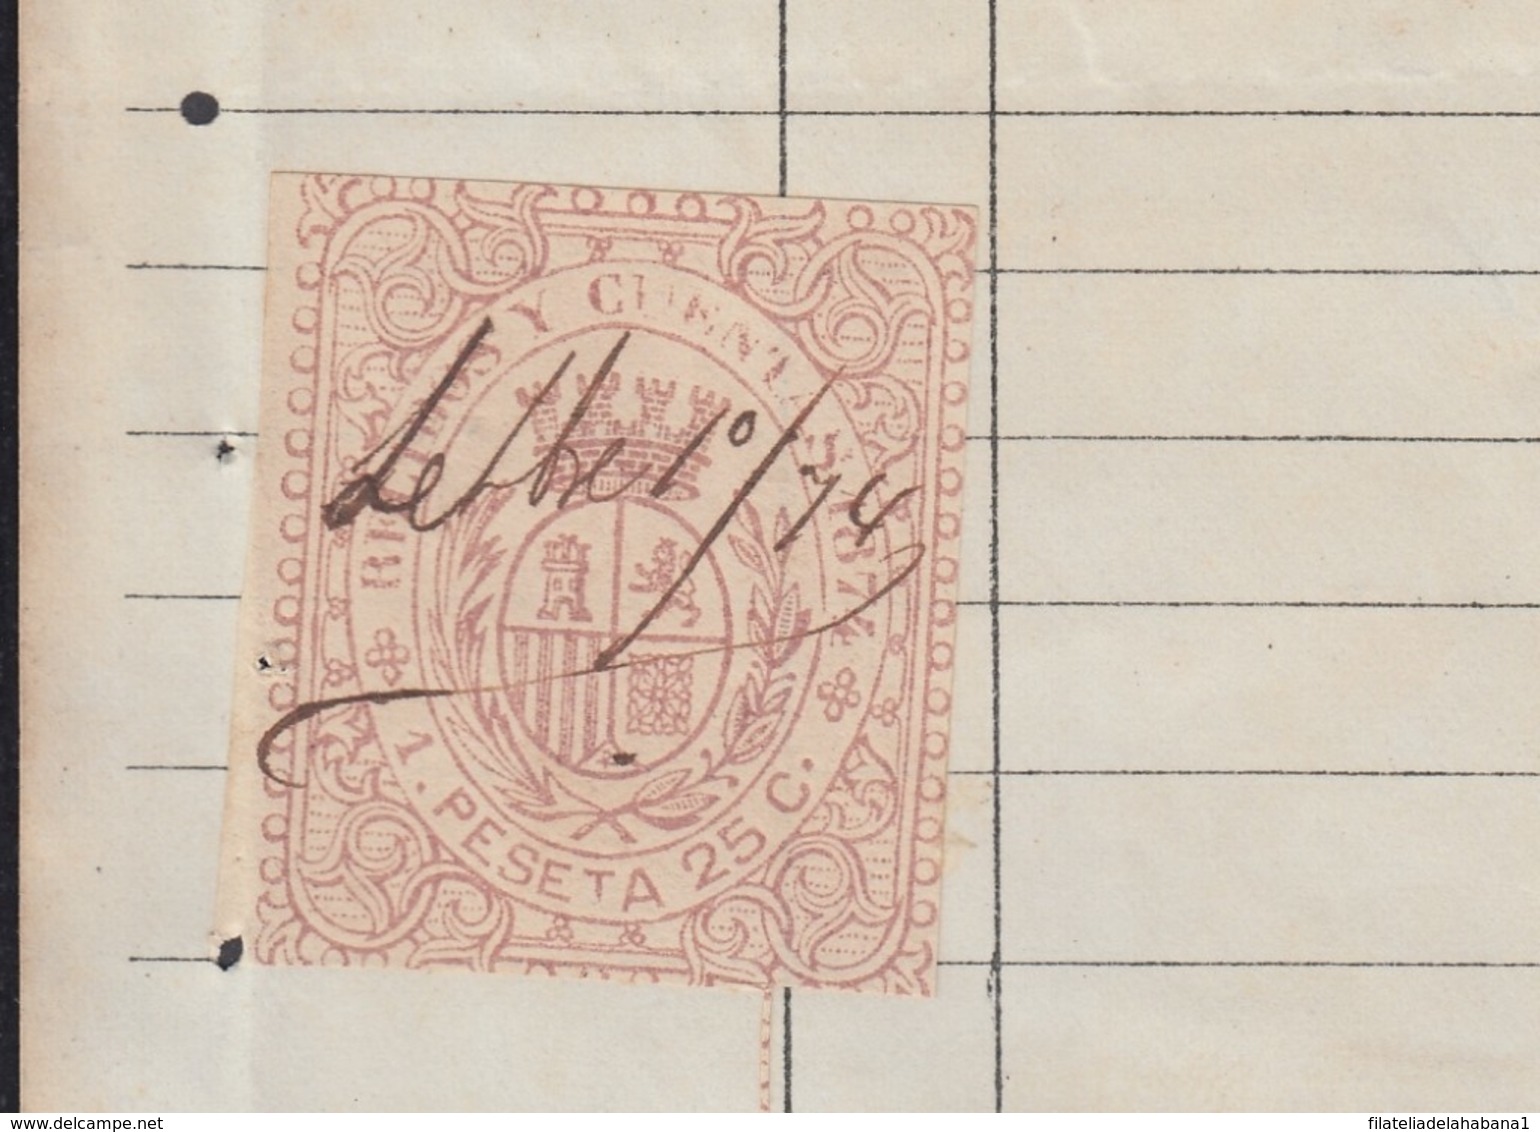 REC-127 CUBA SPAIN ESPAÑA (LG1635) RECIBOS REVENUE 1874. JOYERIA Y PLATERIA. JEWERLY INVOICE 1875. - Timbres-taxe